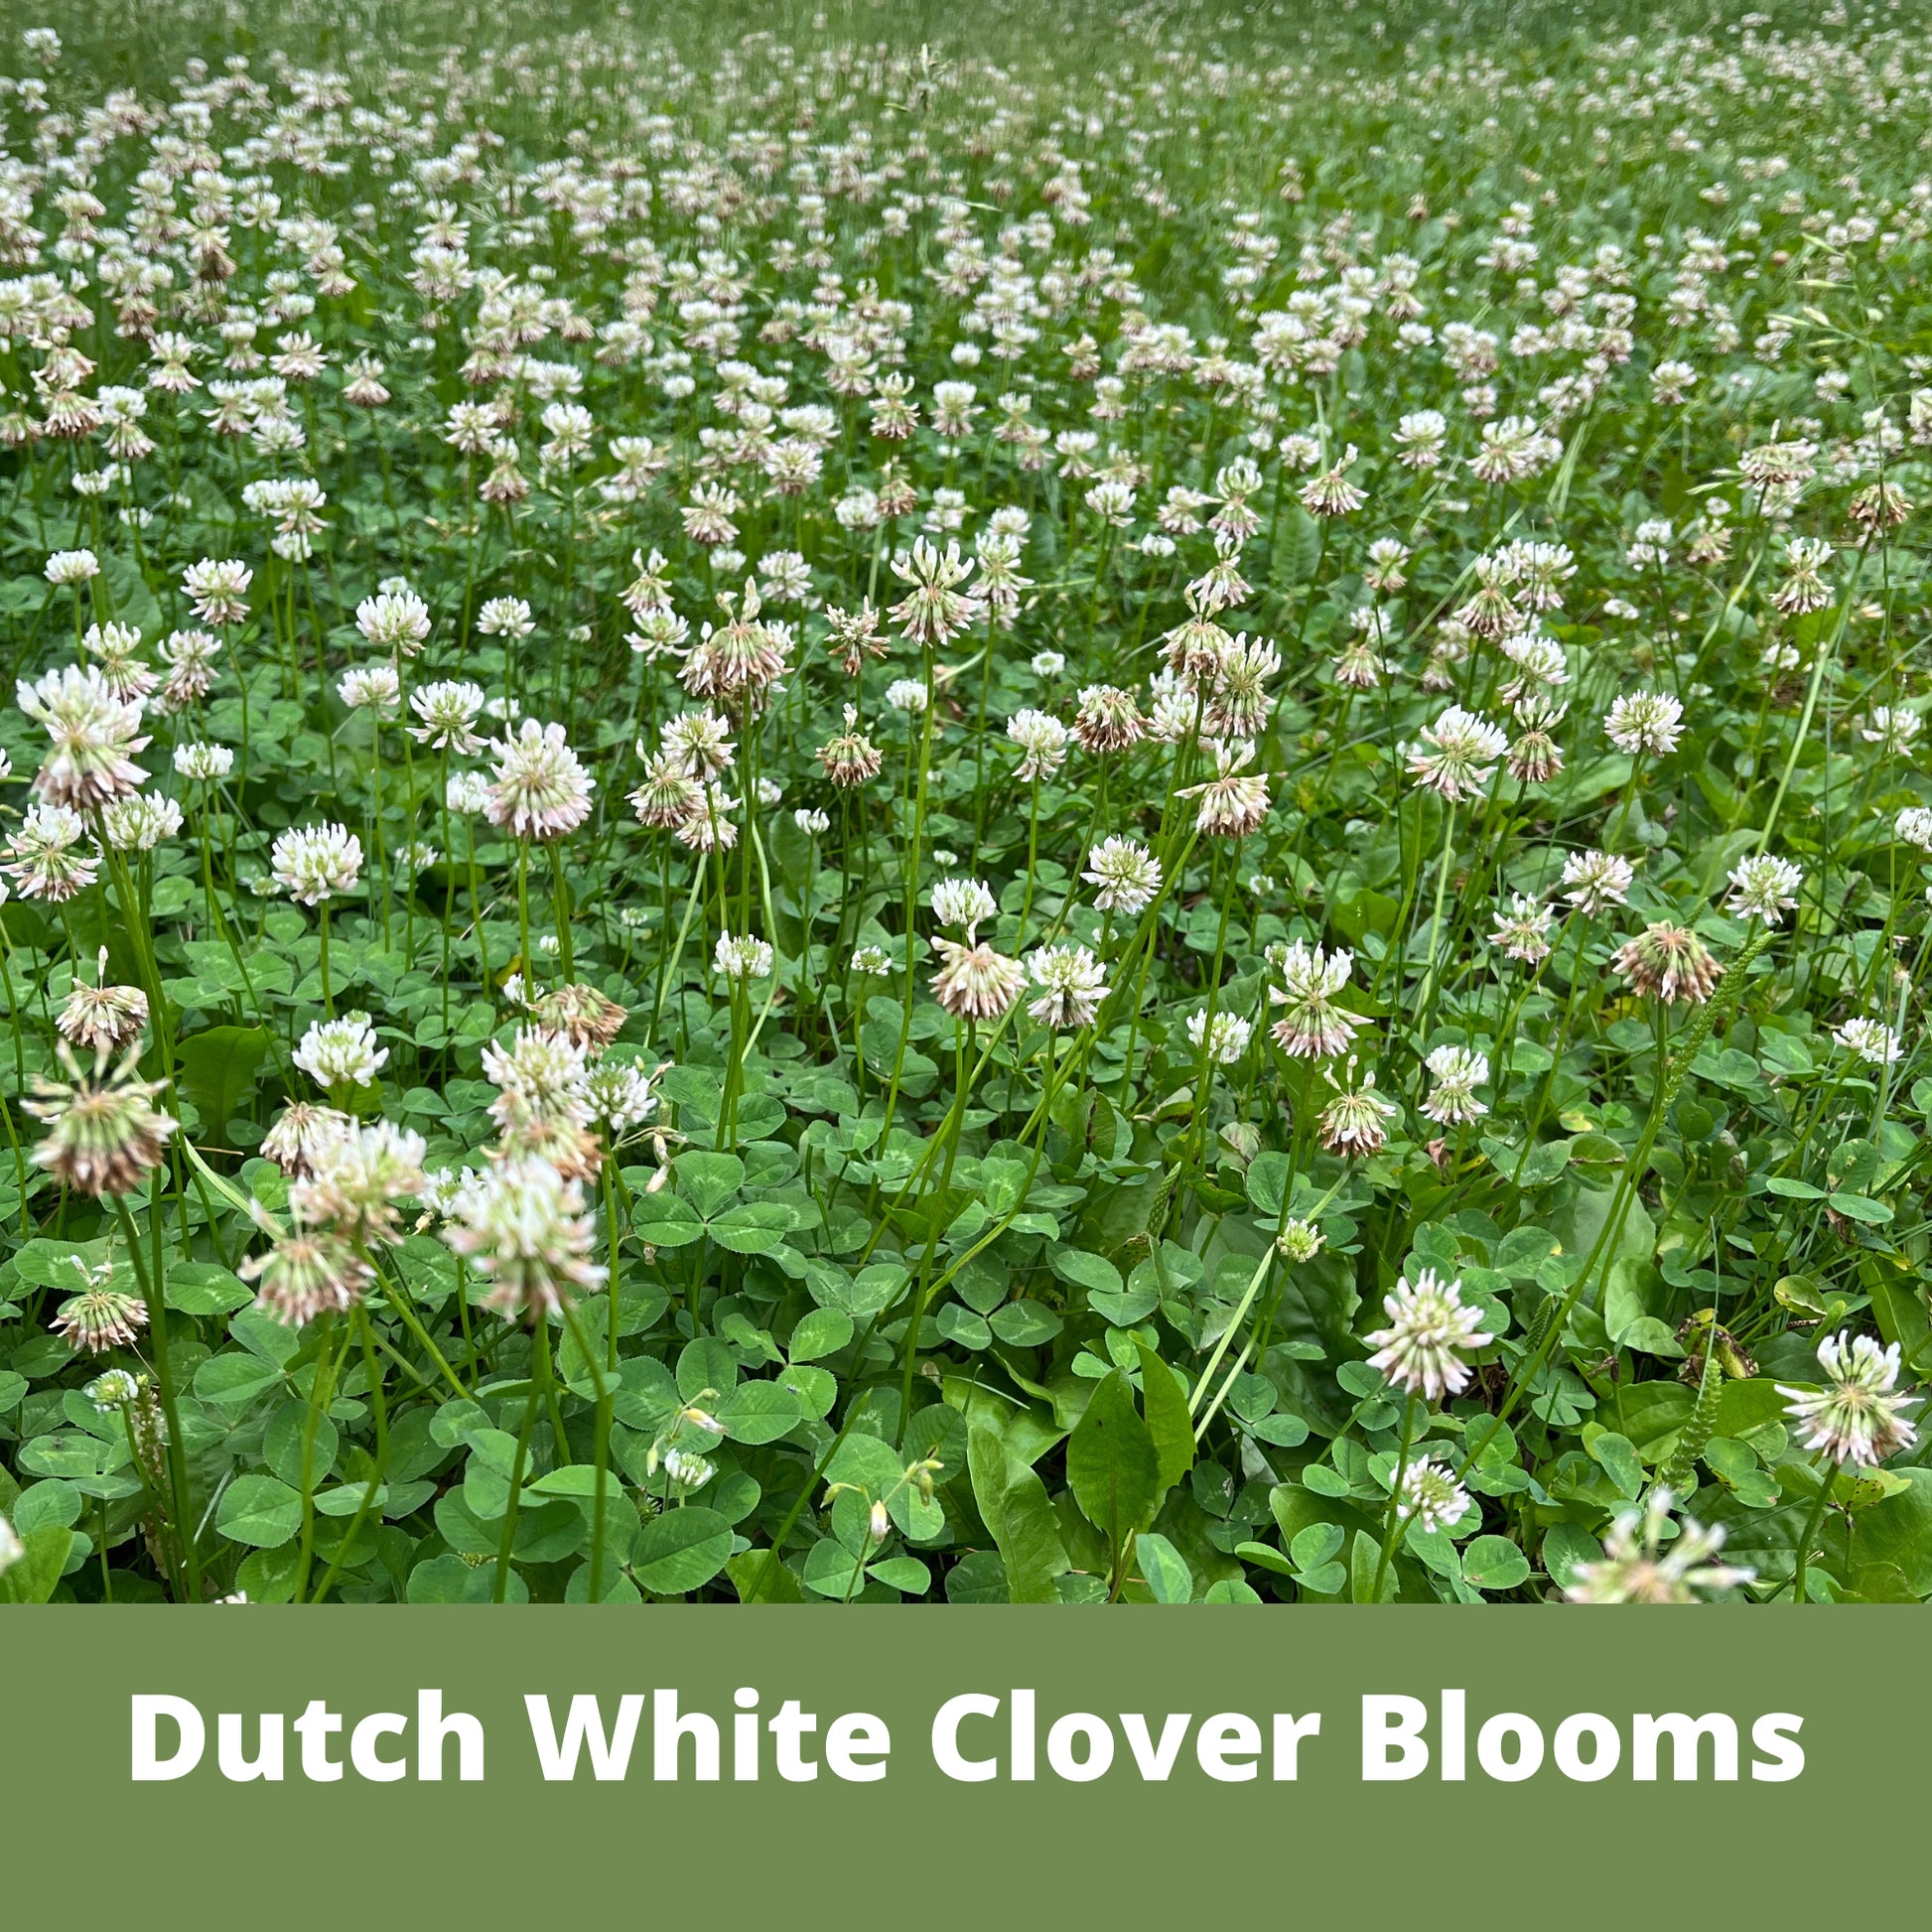 Dutch White Clover Flower Blooms, Flowering Lawn, Alternative Ground Cover, Eco-Friendly Pollinator Lawn